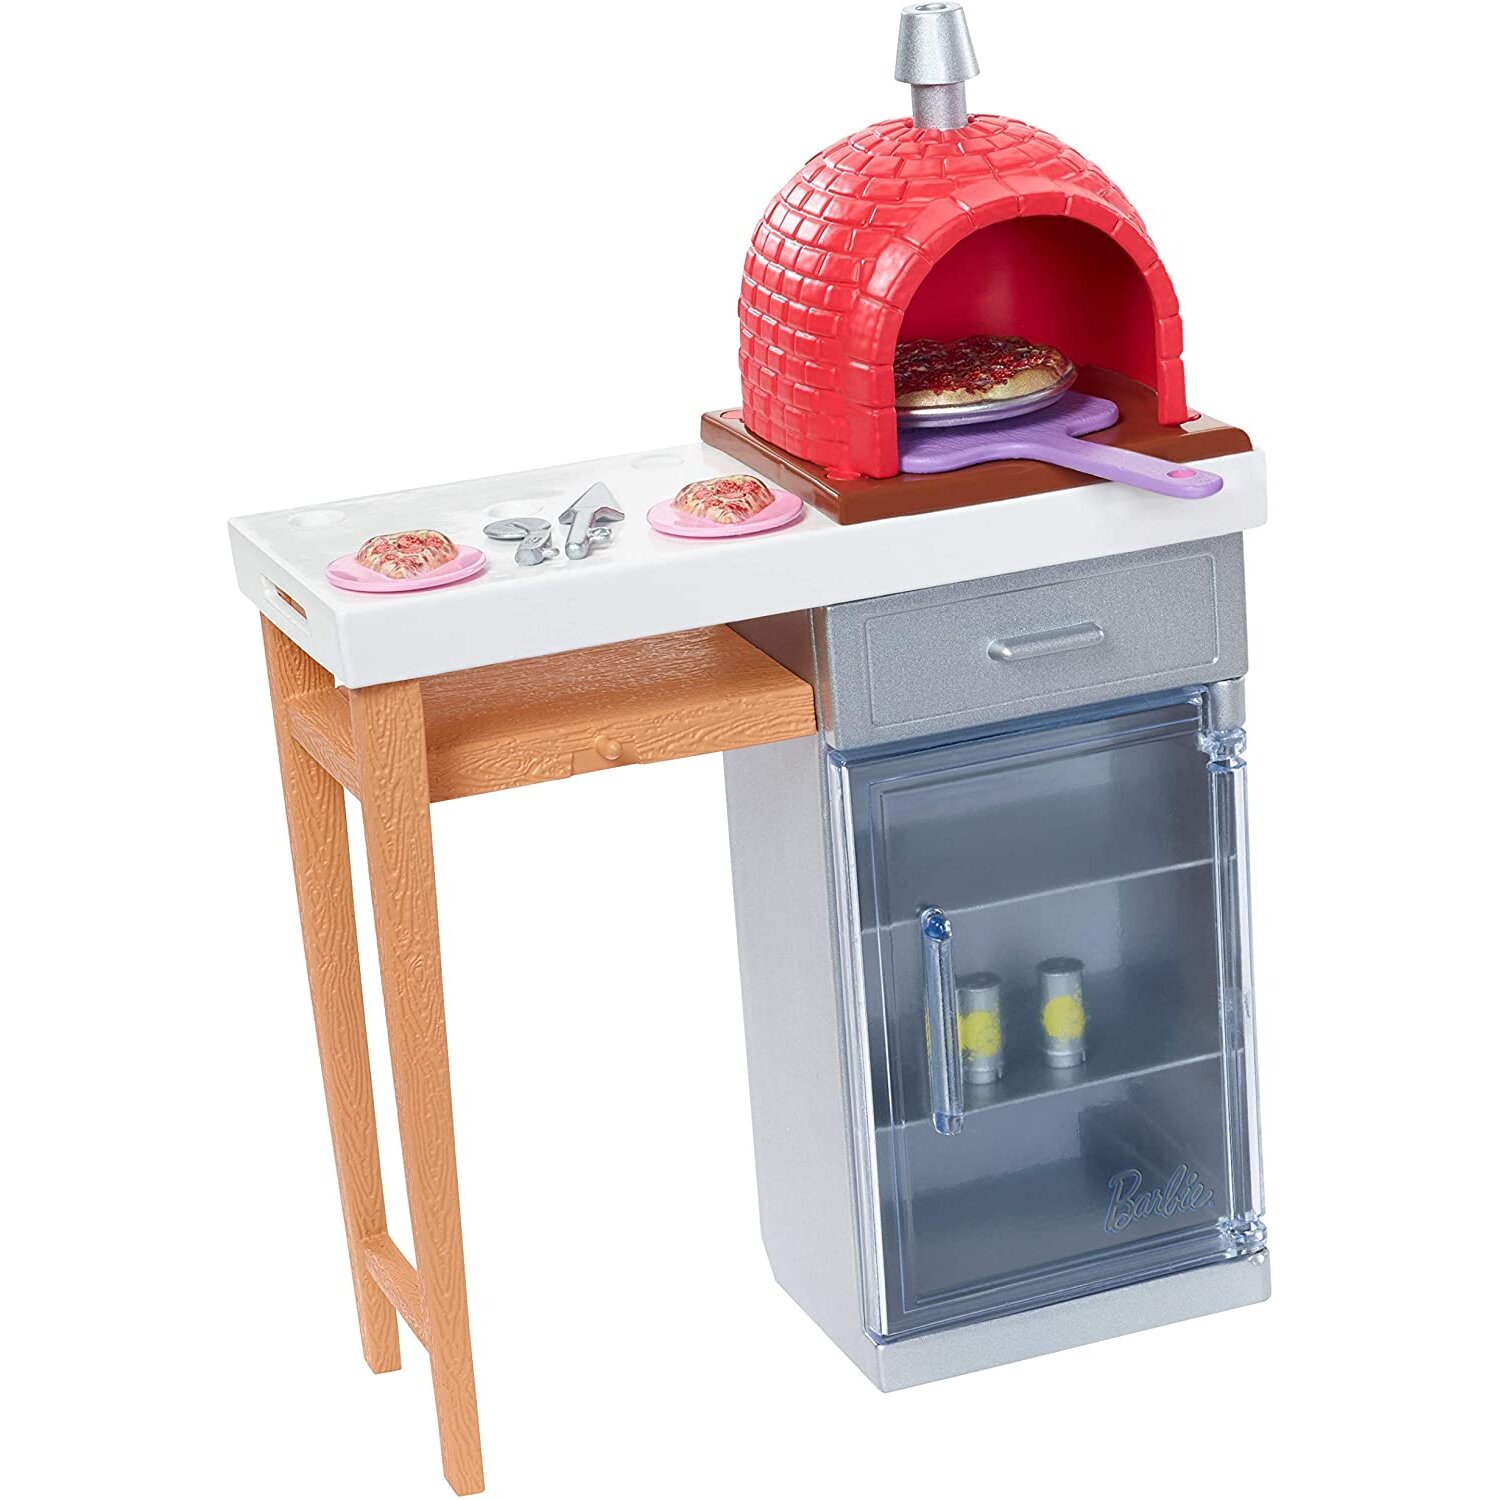 Barbie FXG39 Outdoor Furniture Set, Brick Pizza Oven, Multicolored, 0